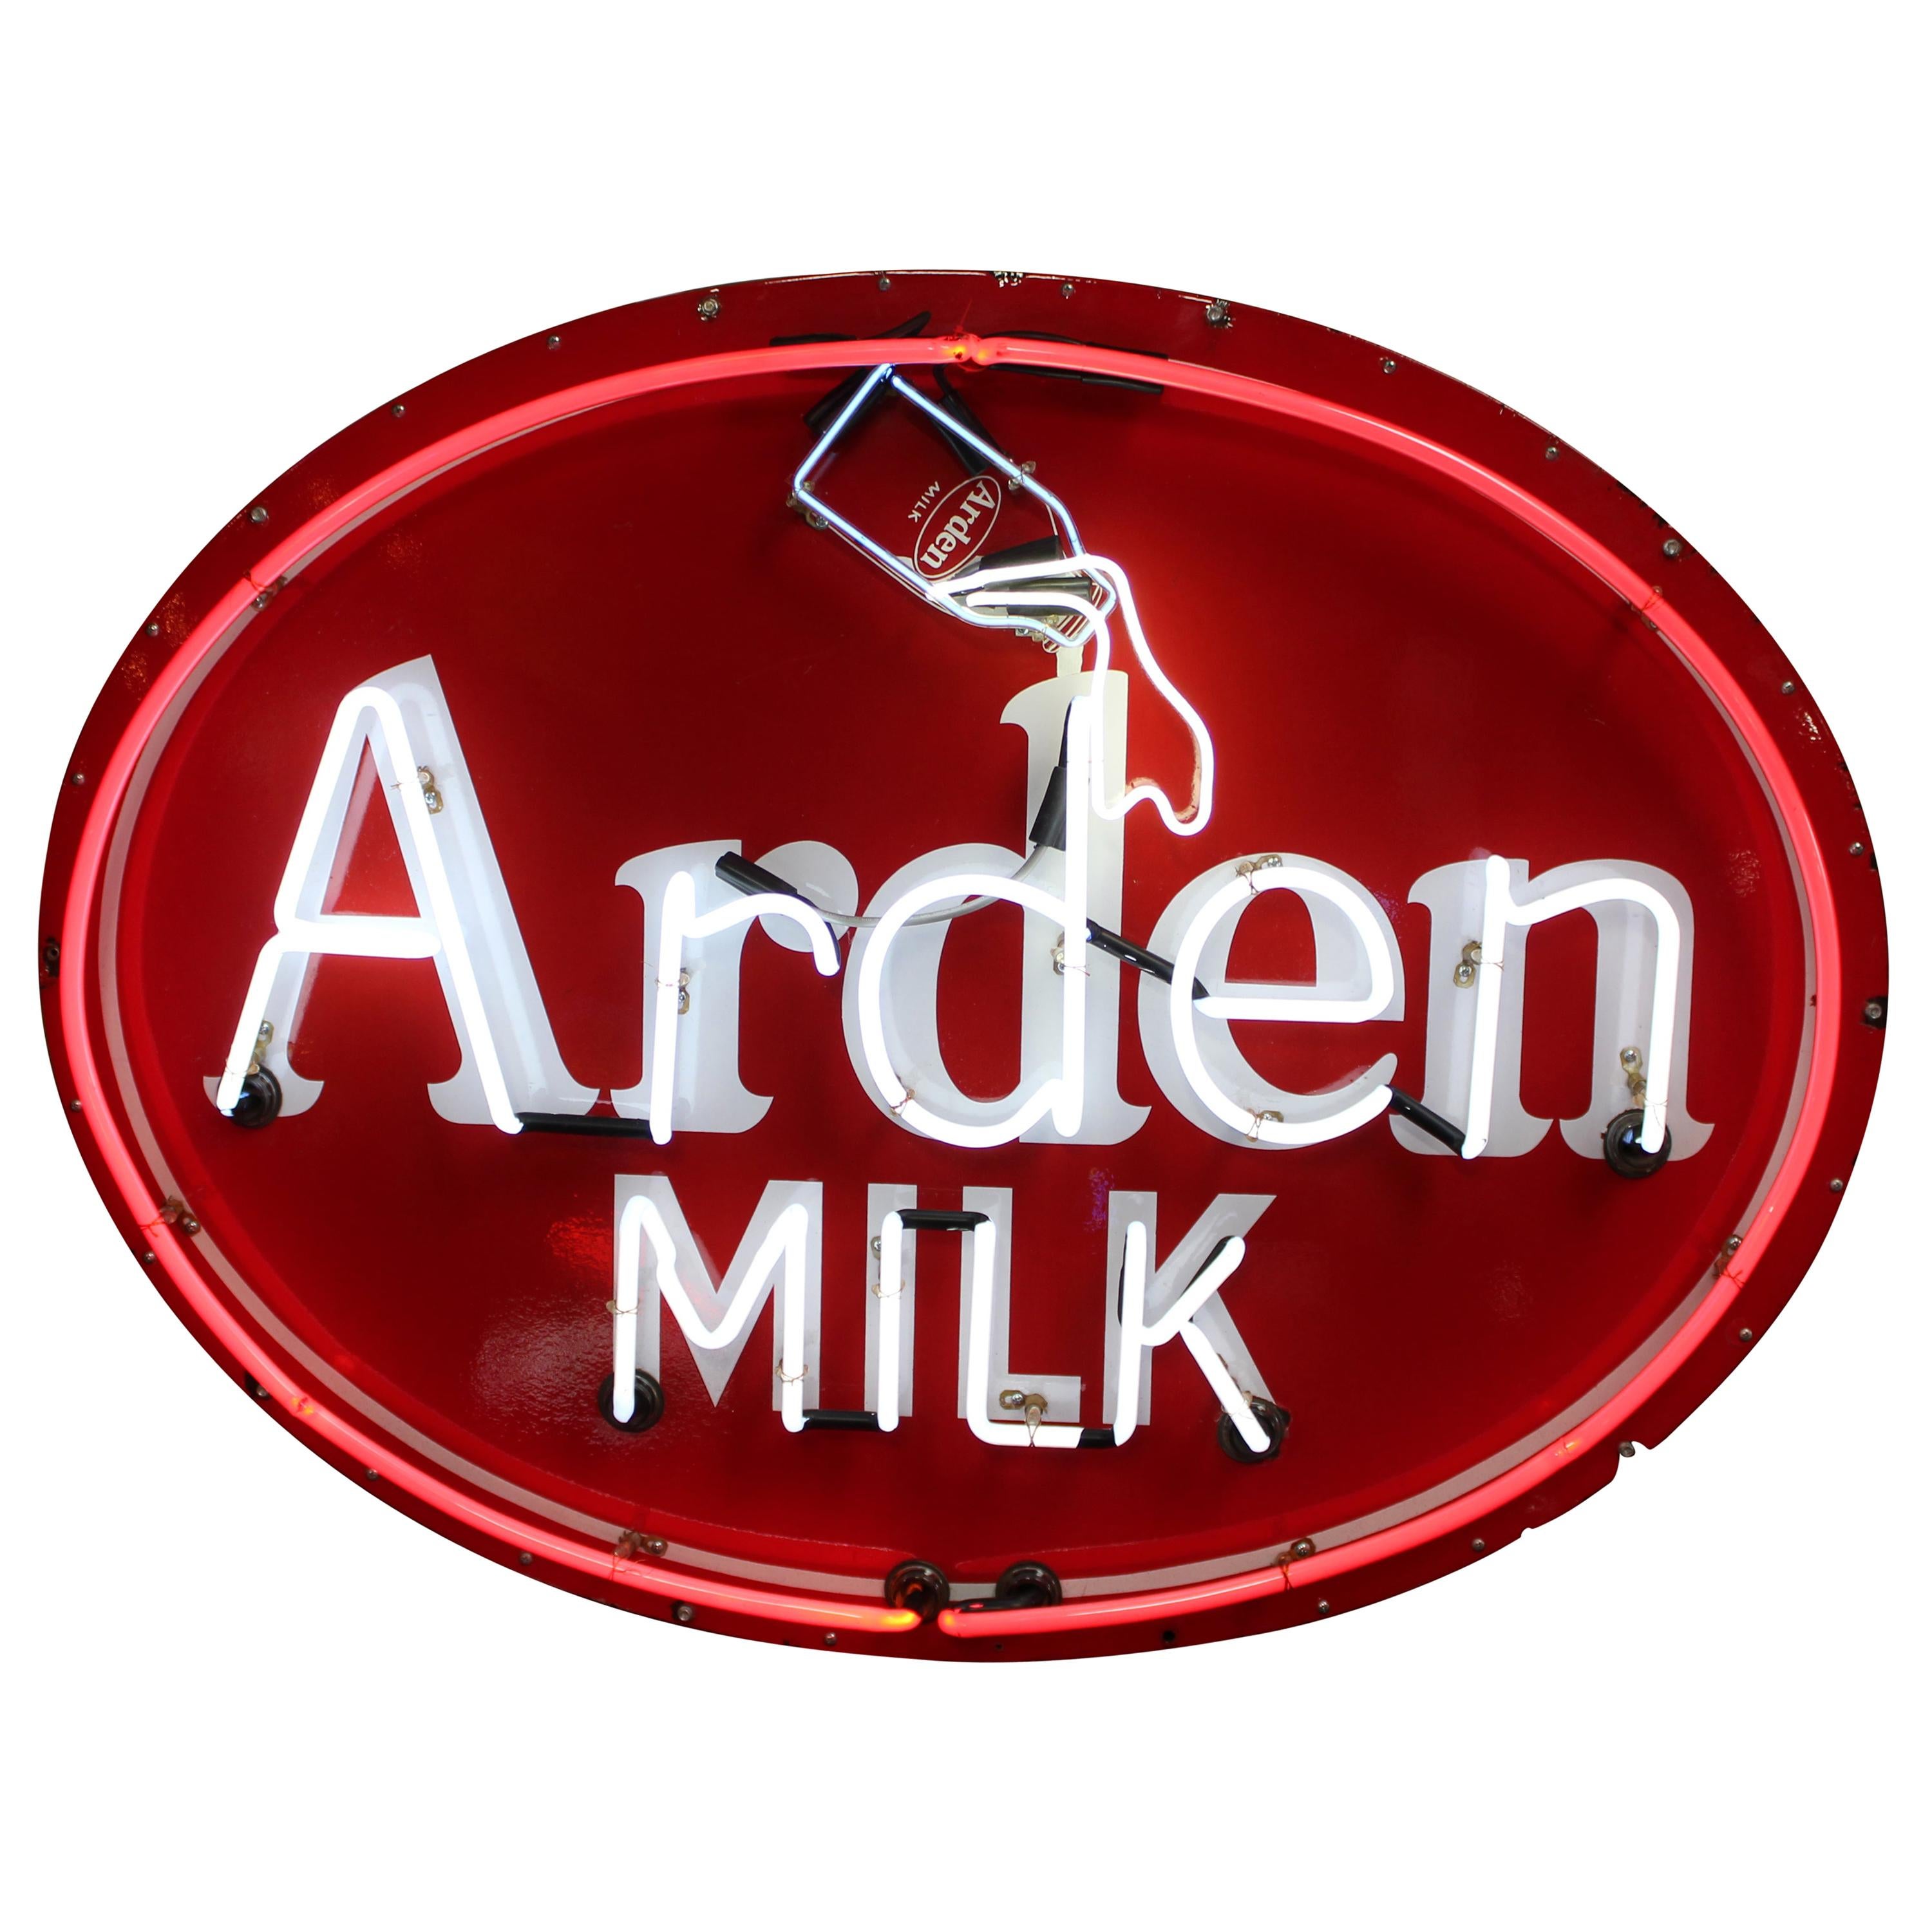 1930s Arden Milk Neon Advertising Sign For Sale